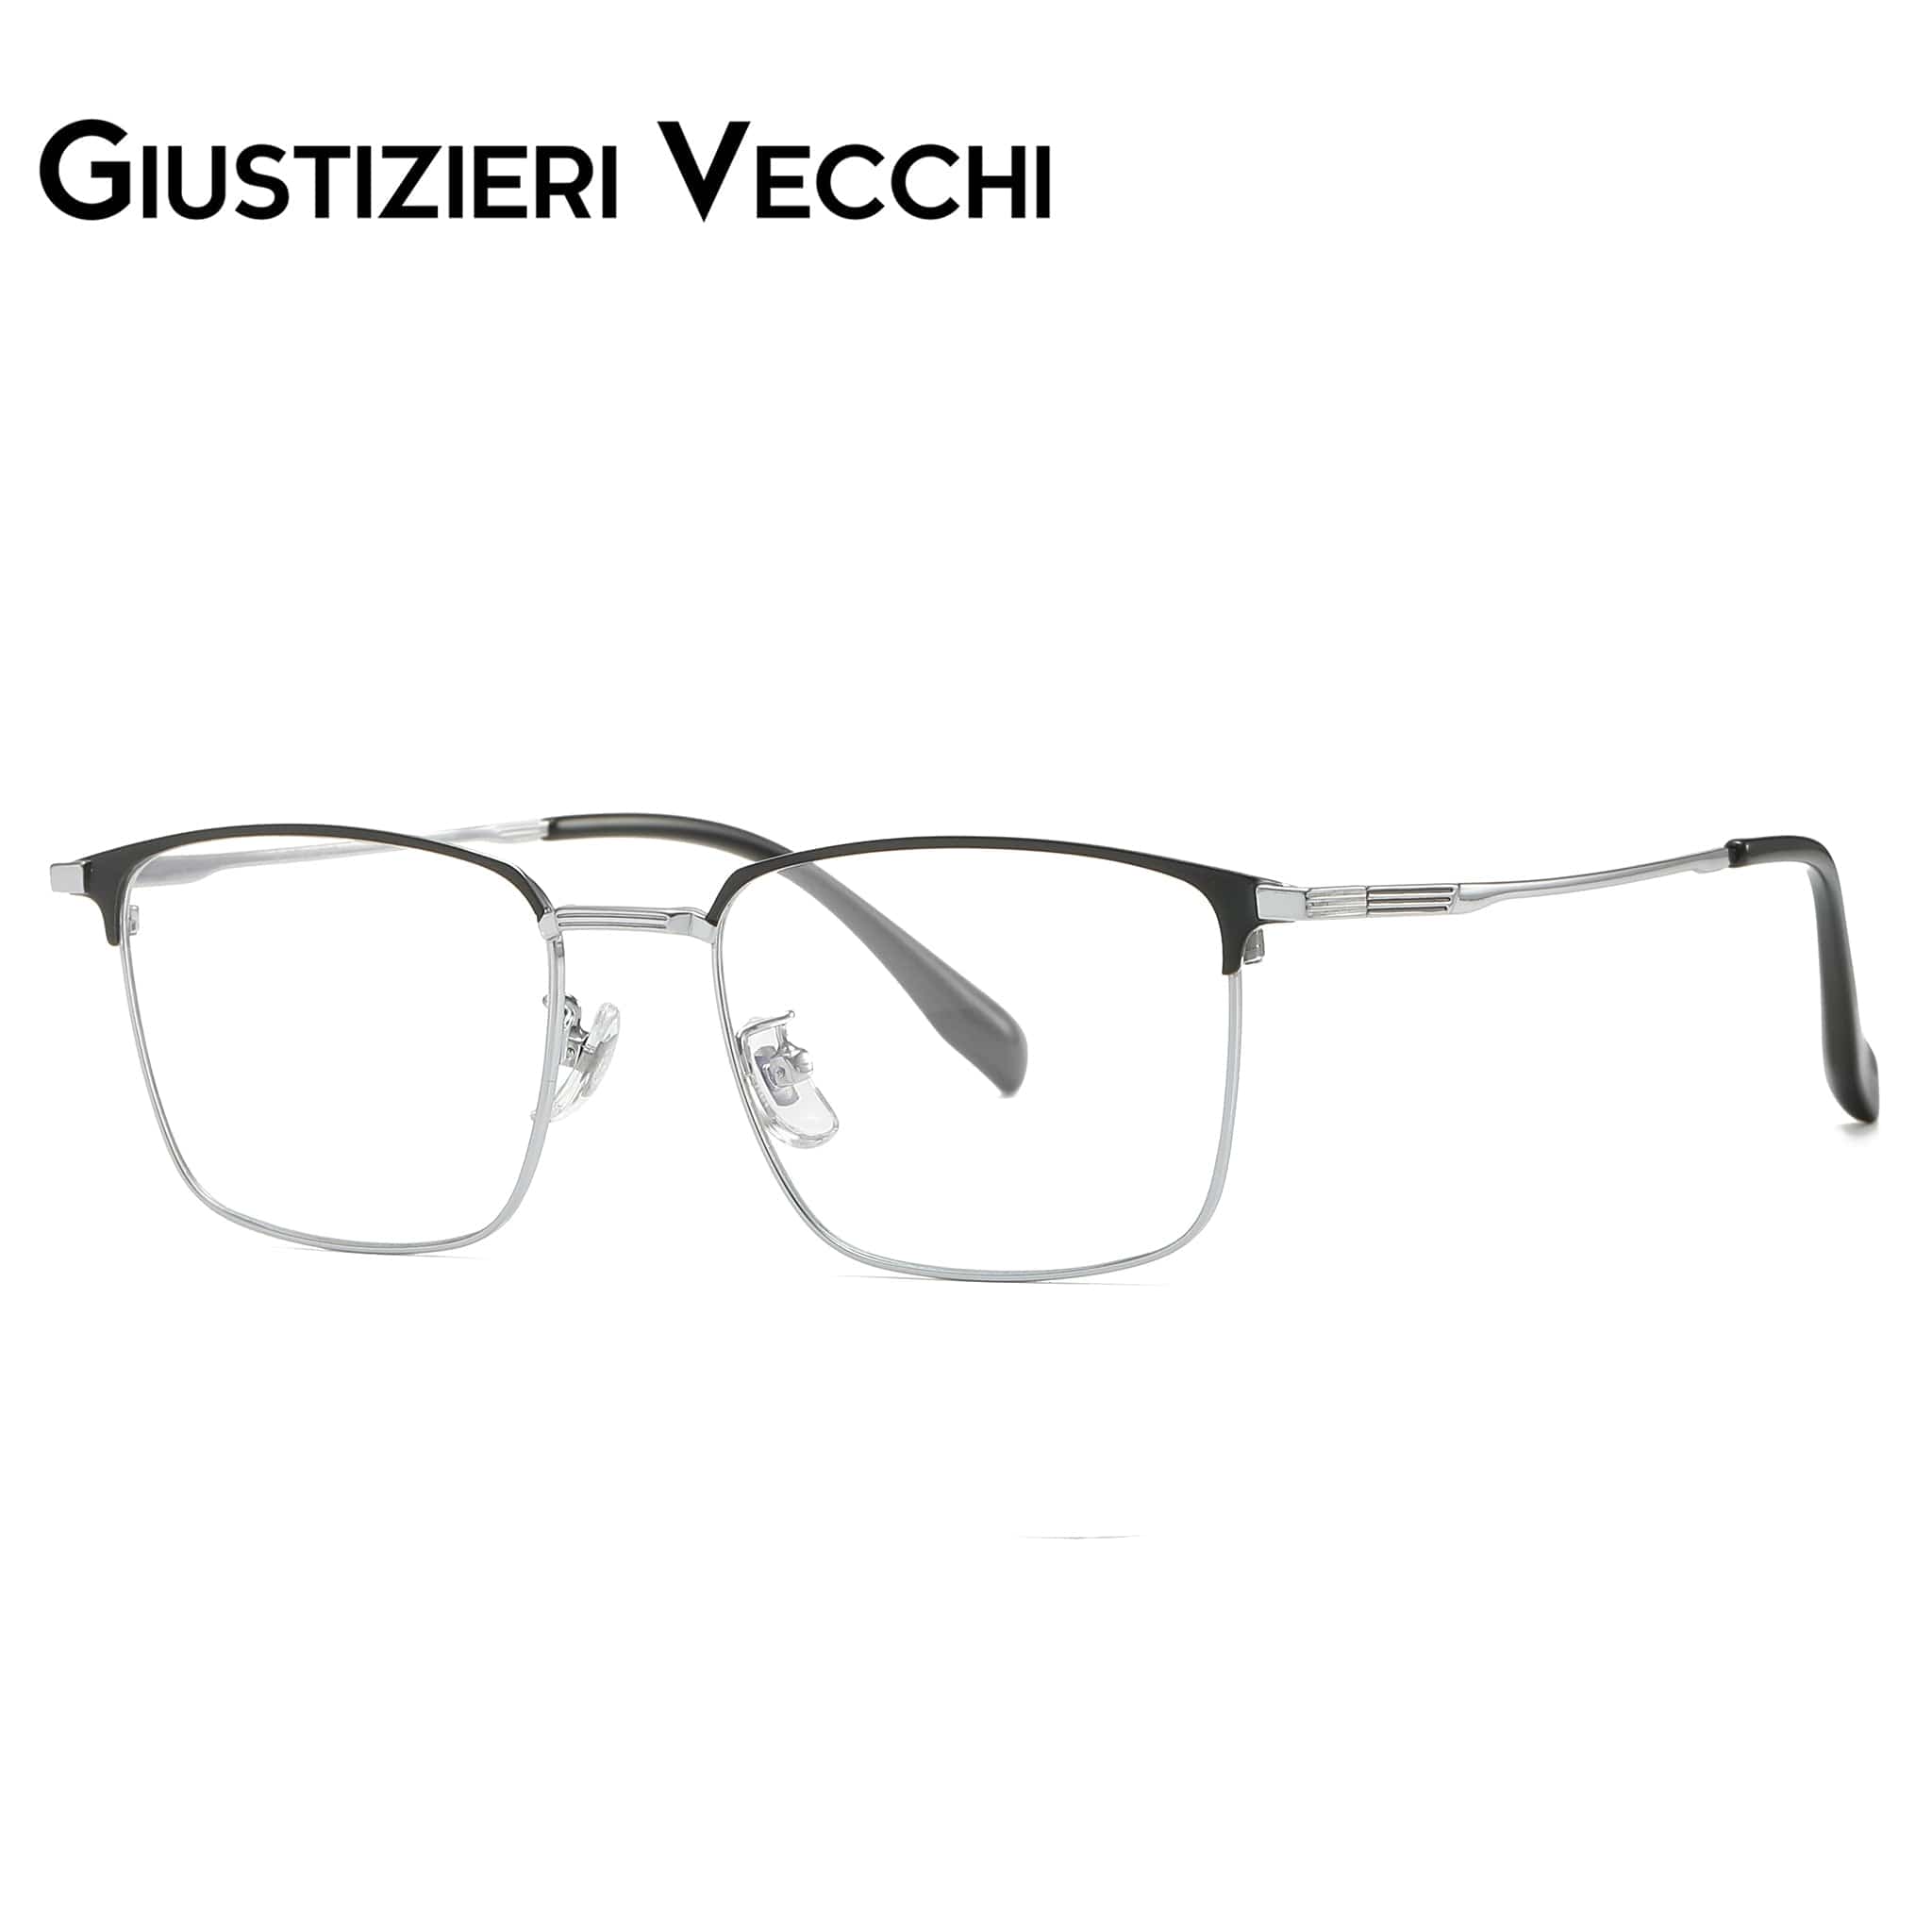 GIUSTIZIERI VECCHI Eyeglasses NovaBurst Duo